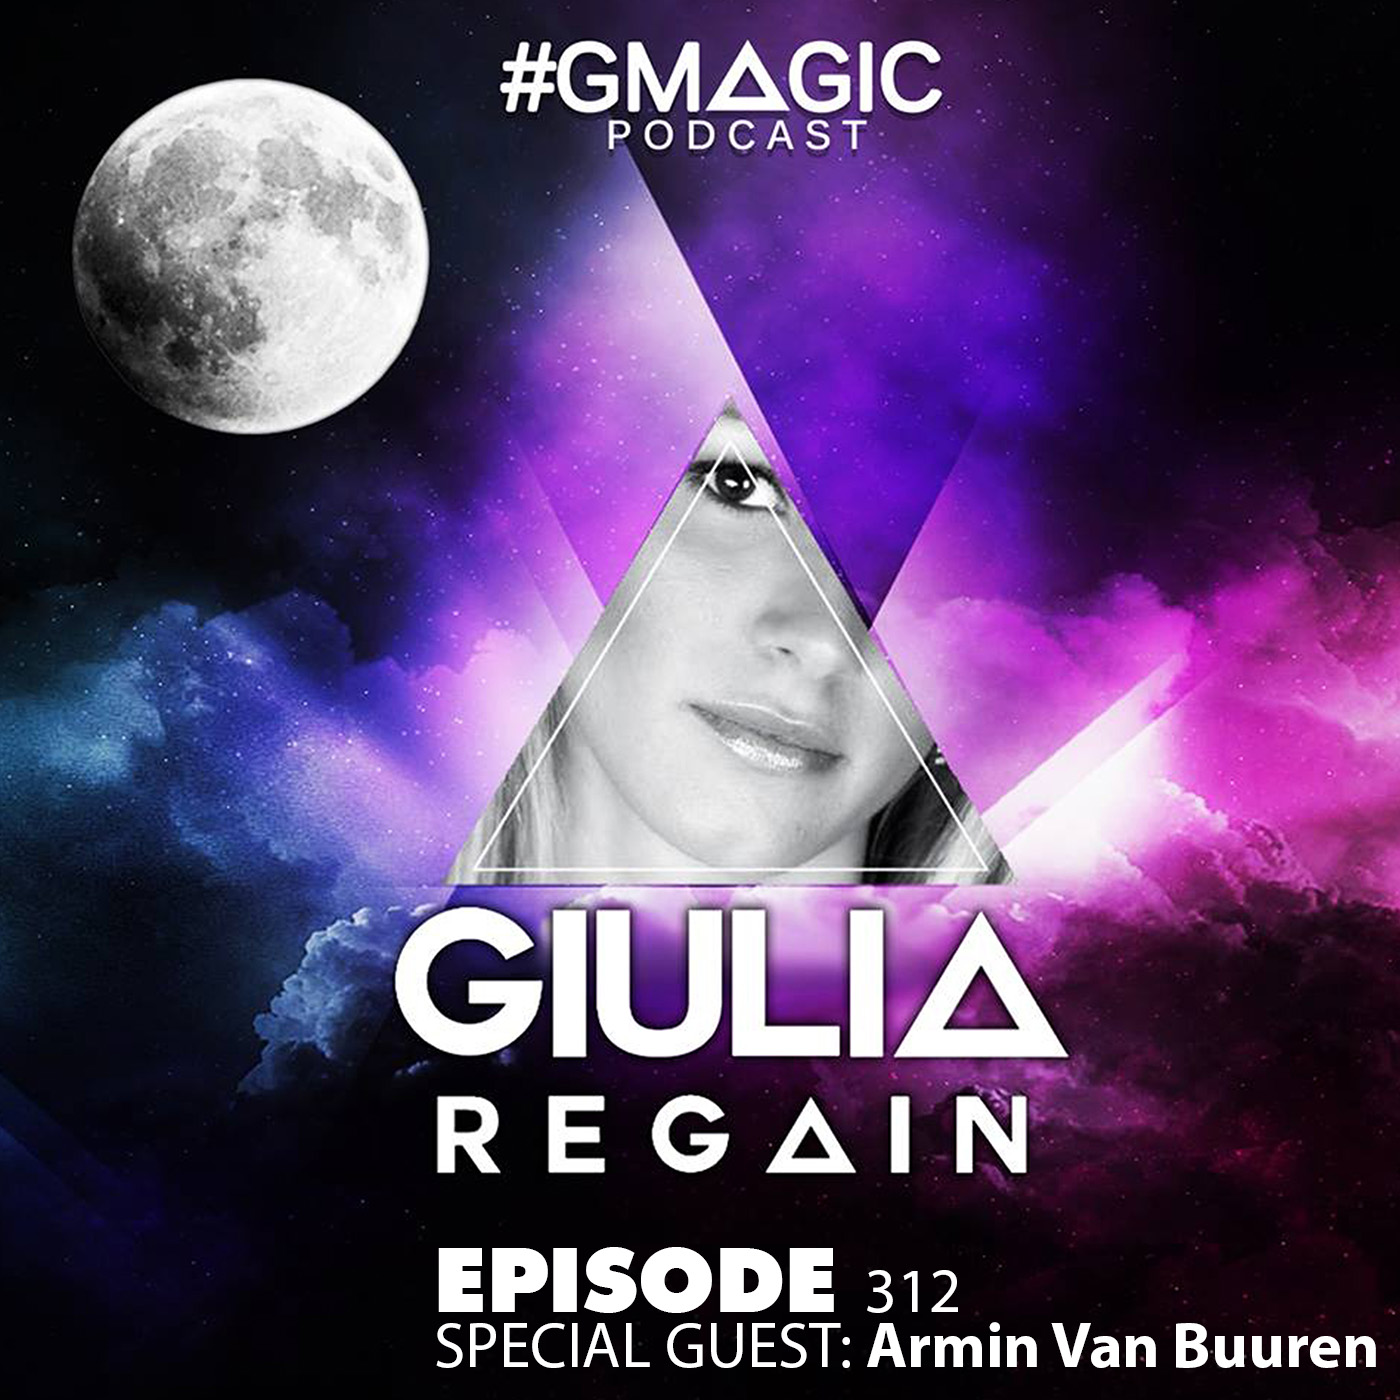 #Gmagic Podcast 312: Special Guest - Armin Van Buuren